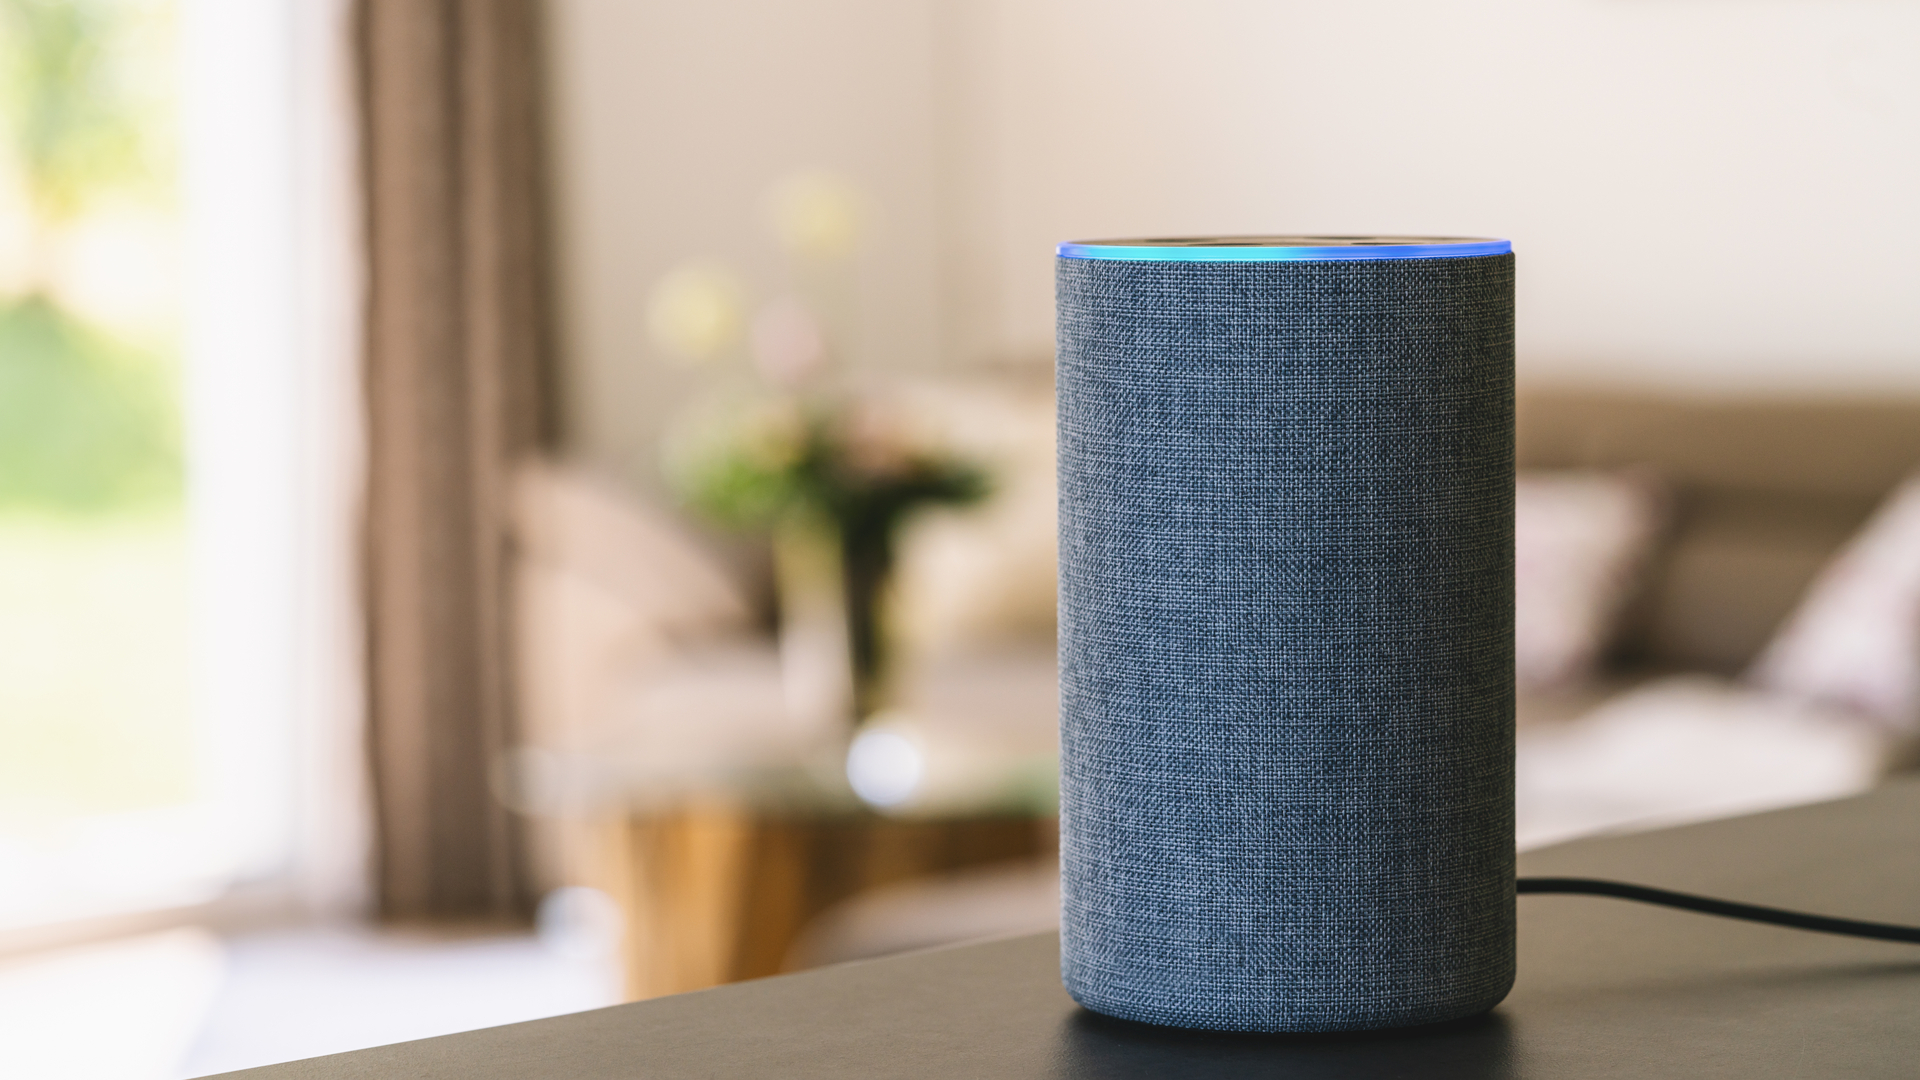 *NEW* Amazon Echo "2nd Generation" Smart Speaker with Alexa Charcoal Fabric